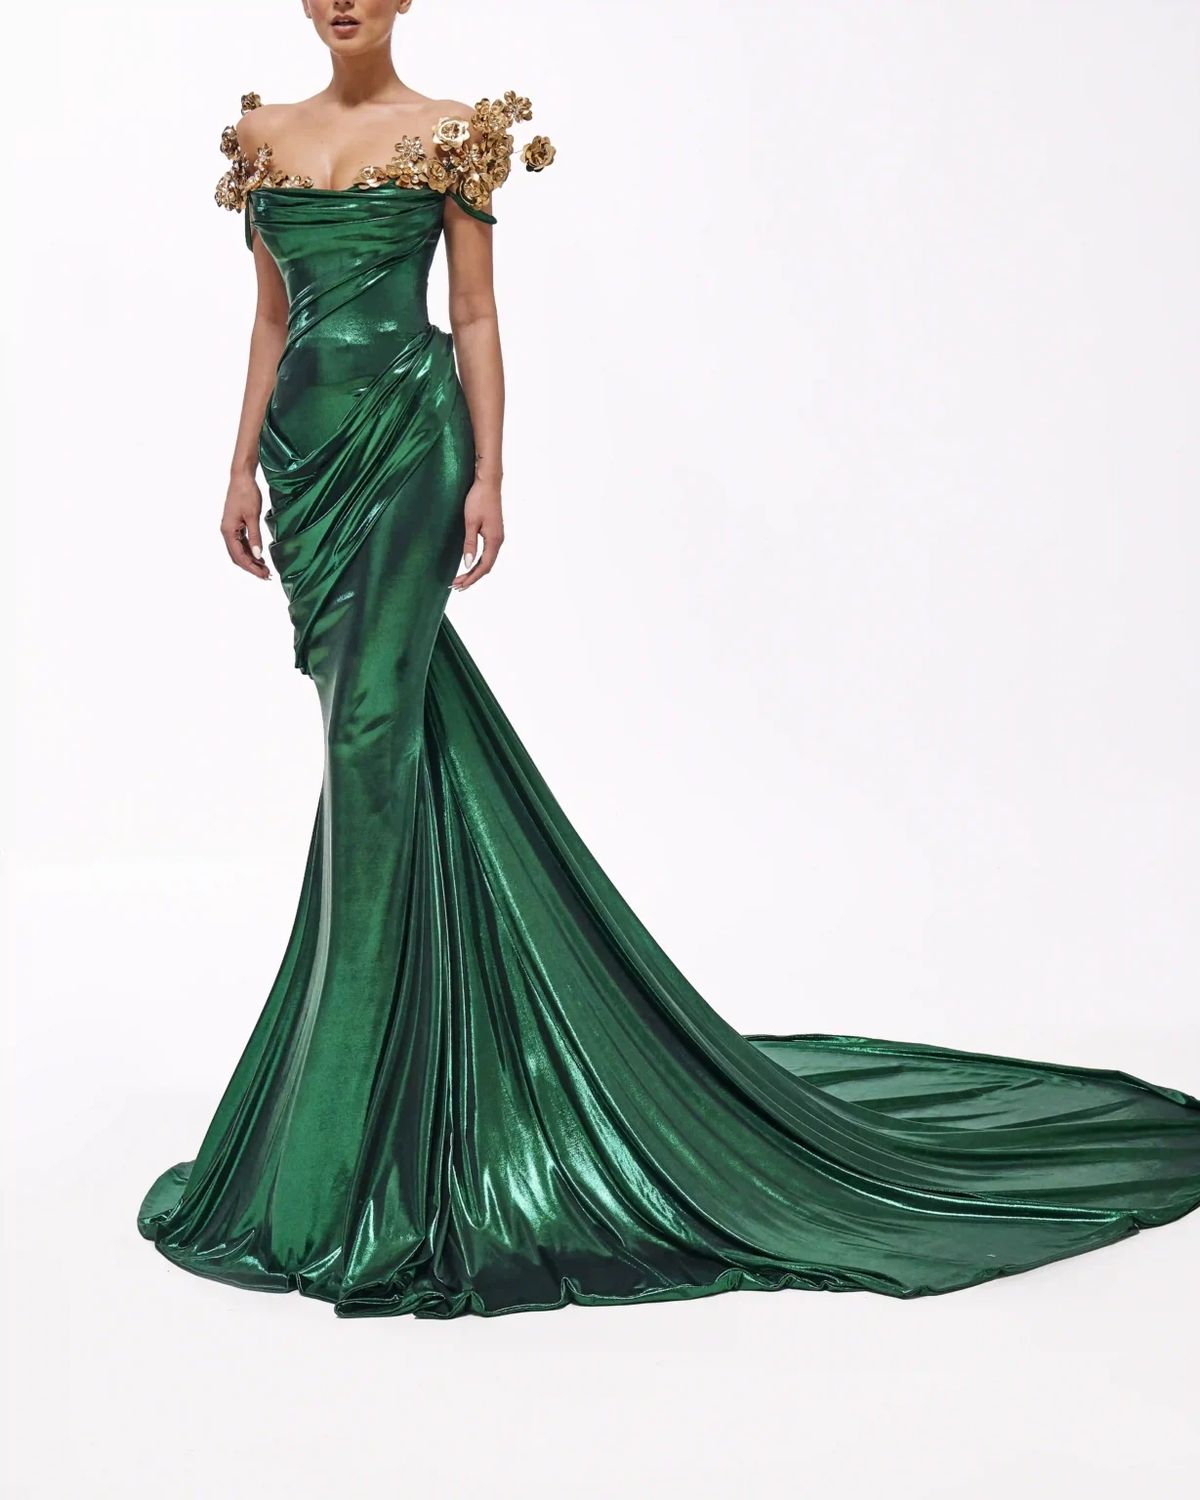 Style metallic-majesty-24-26 Valdrin Sahiti Size S Pageant Green Mermaid Dress on Queenly